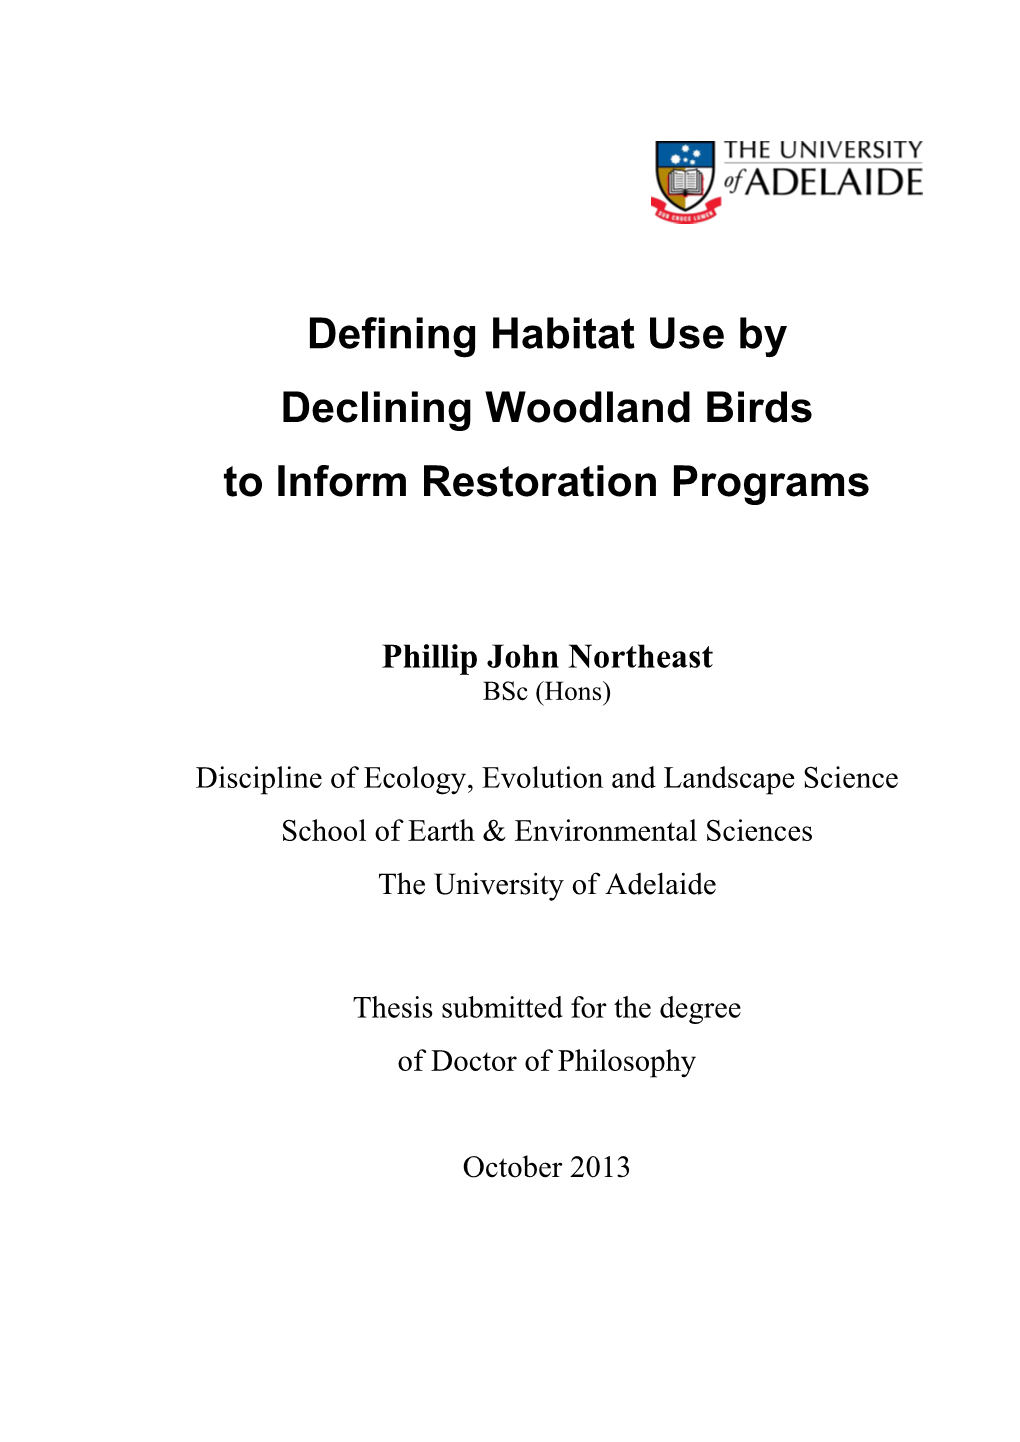 Defining Habitat Use by Declining Woodland Birds to Inform Restoration Programs